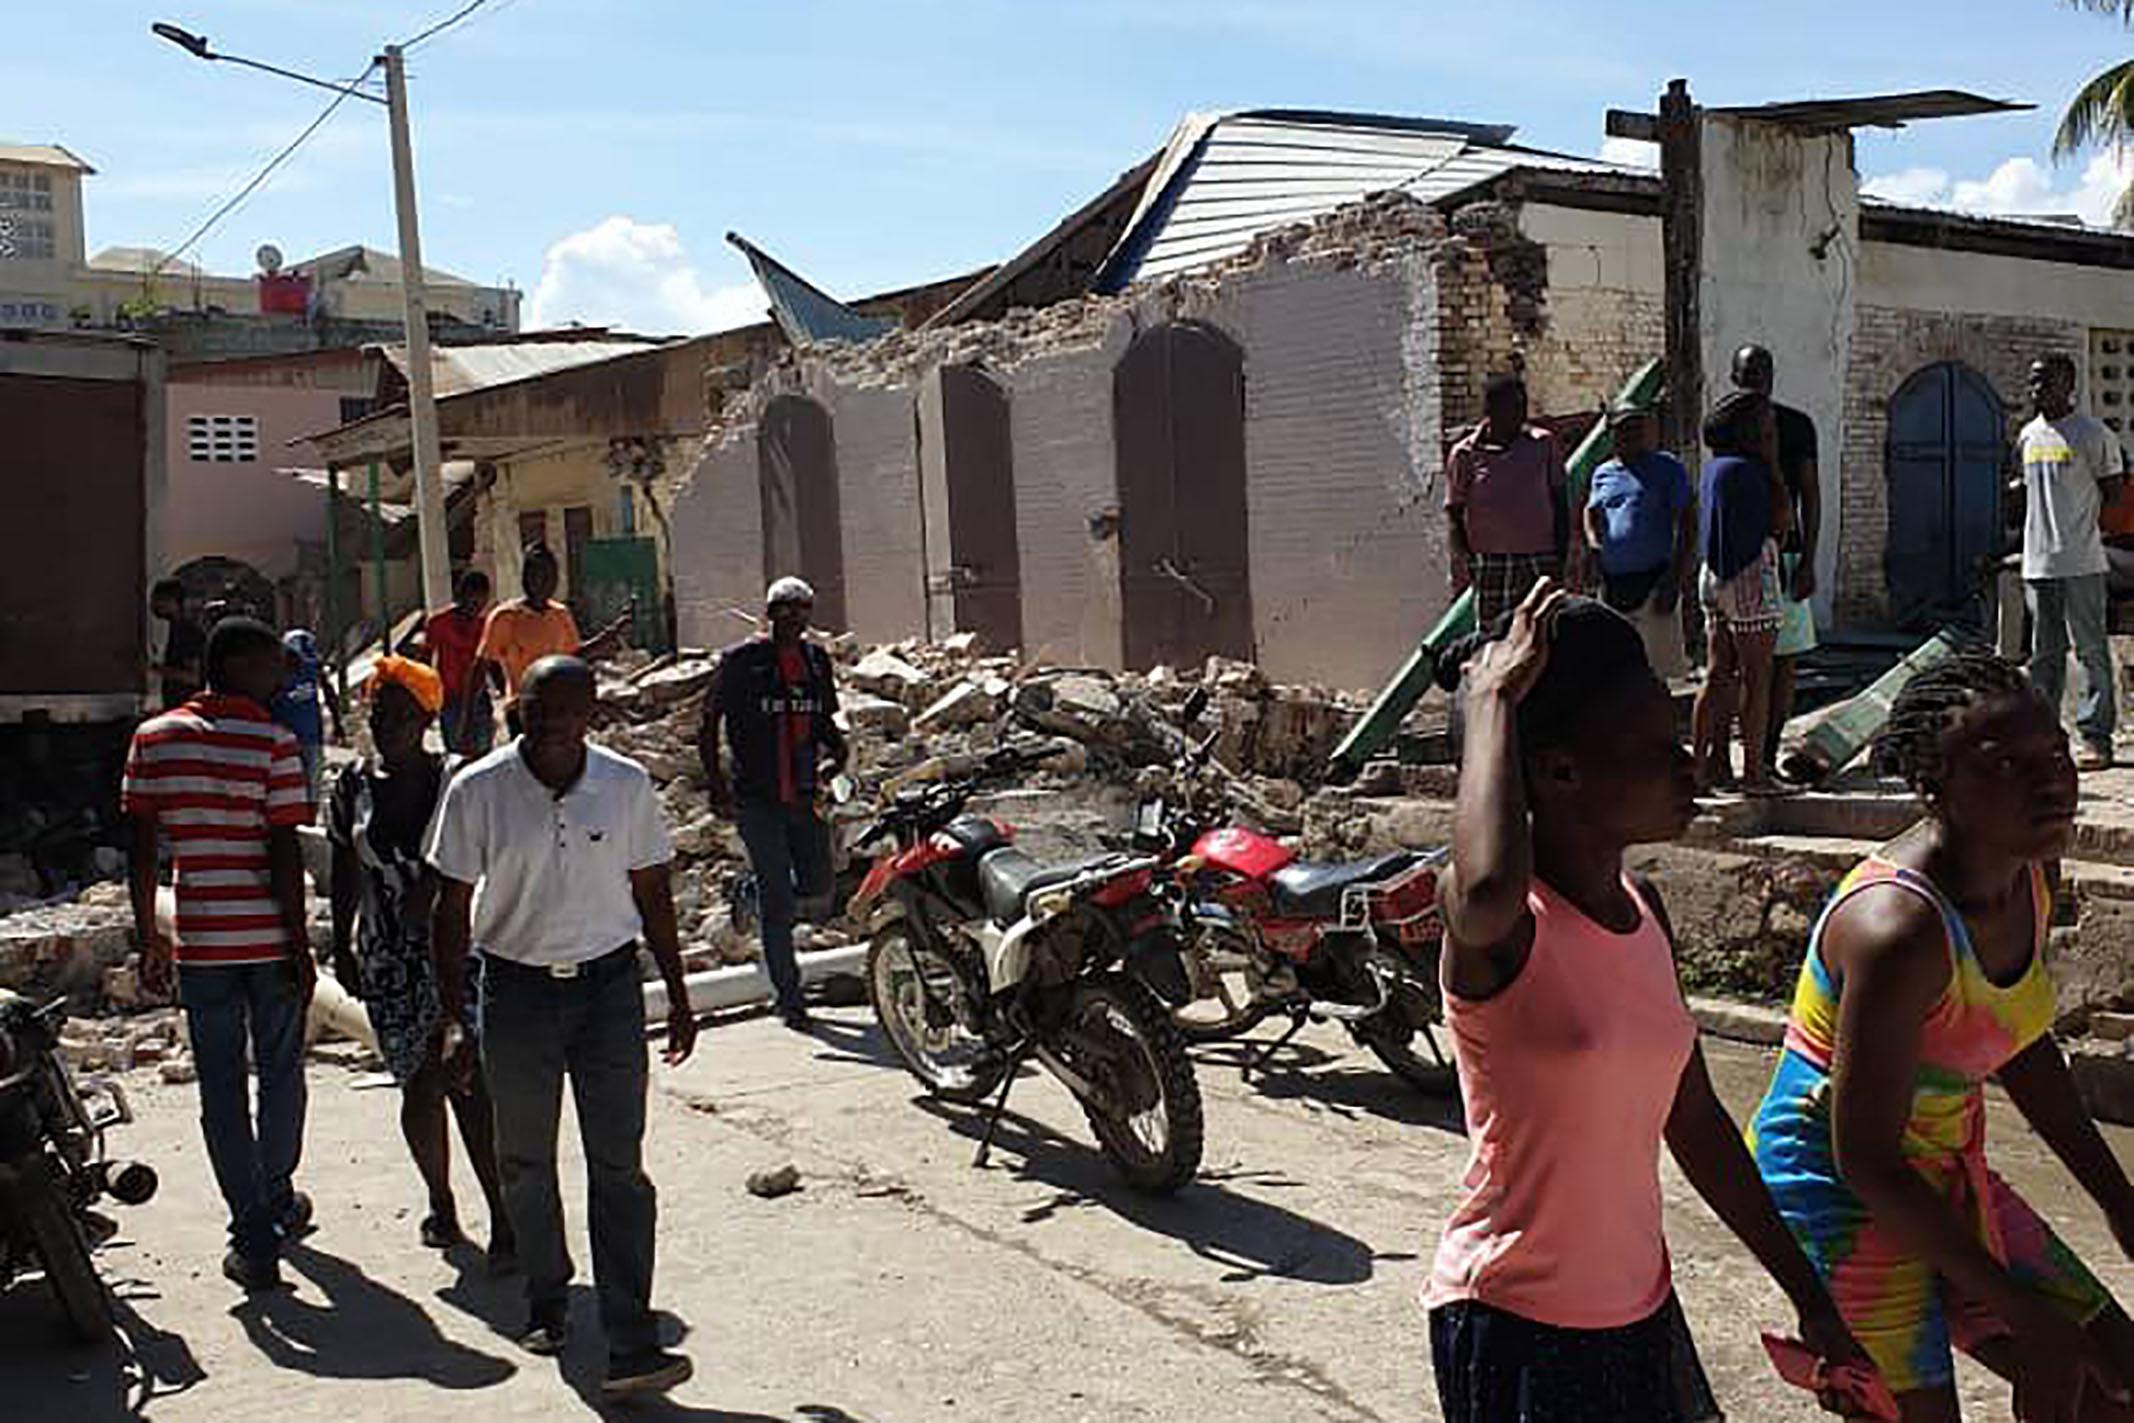 The reason behind devastating earthquakes in Haiti